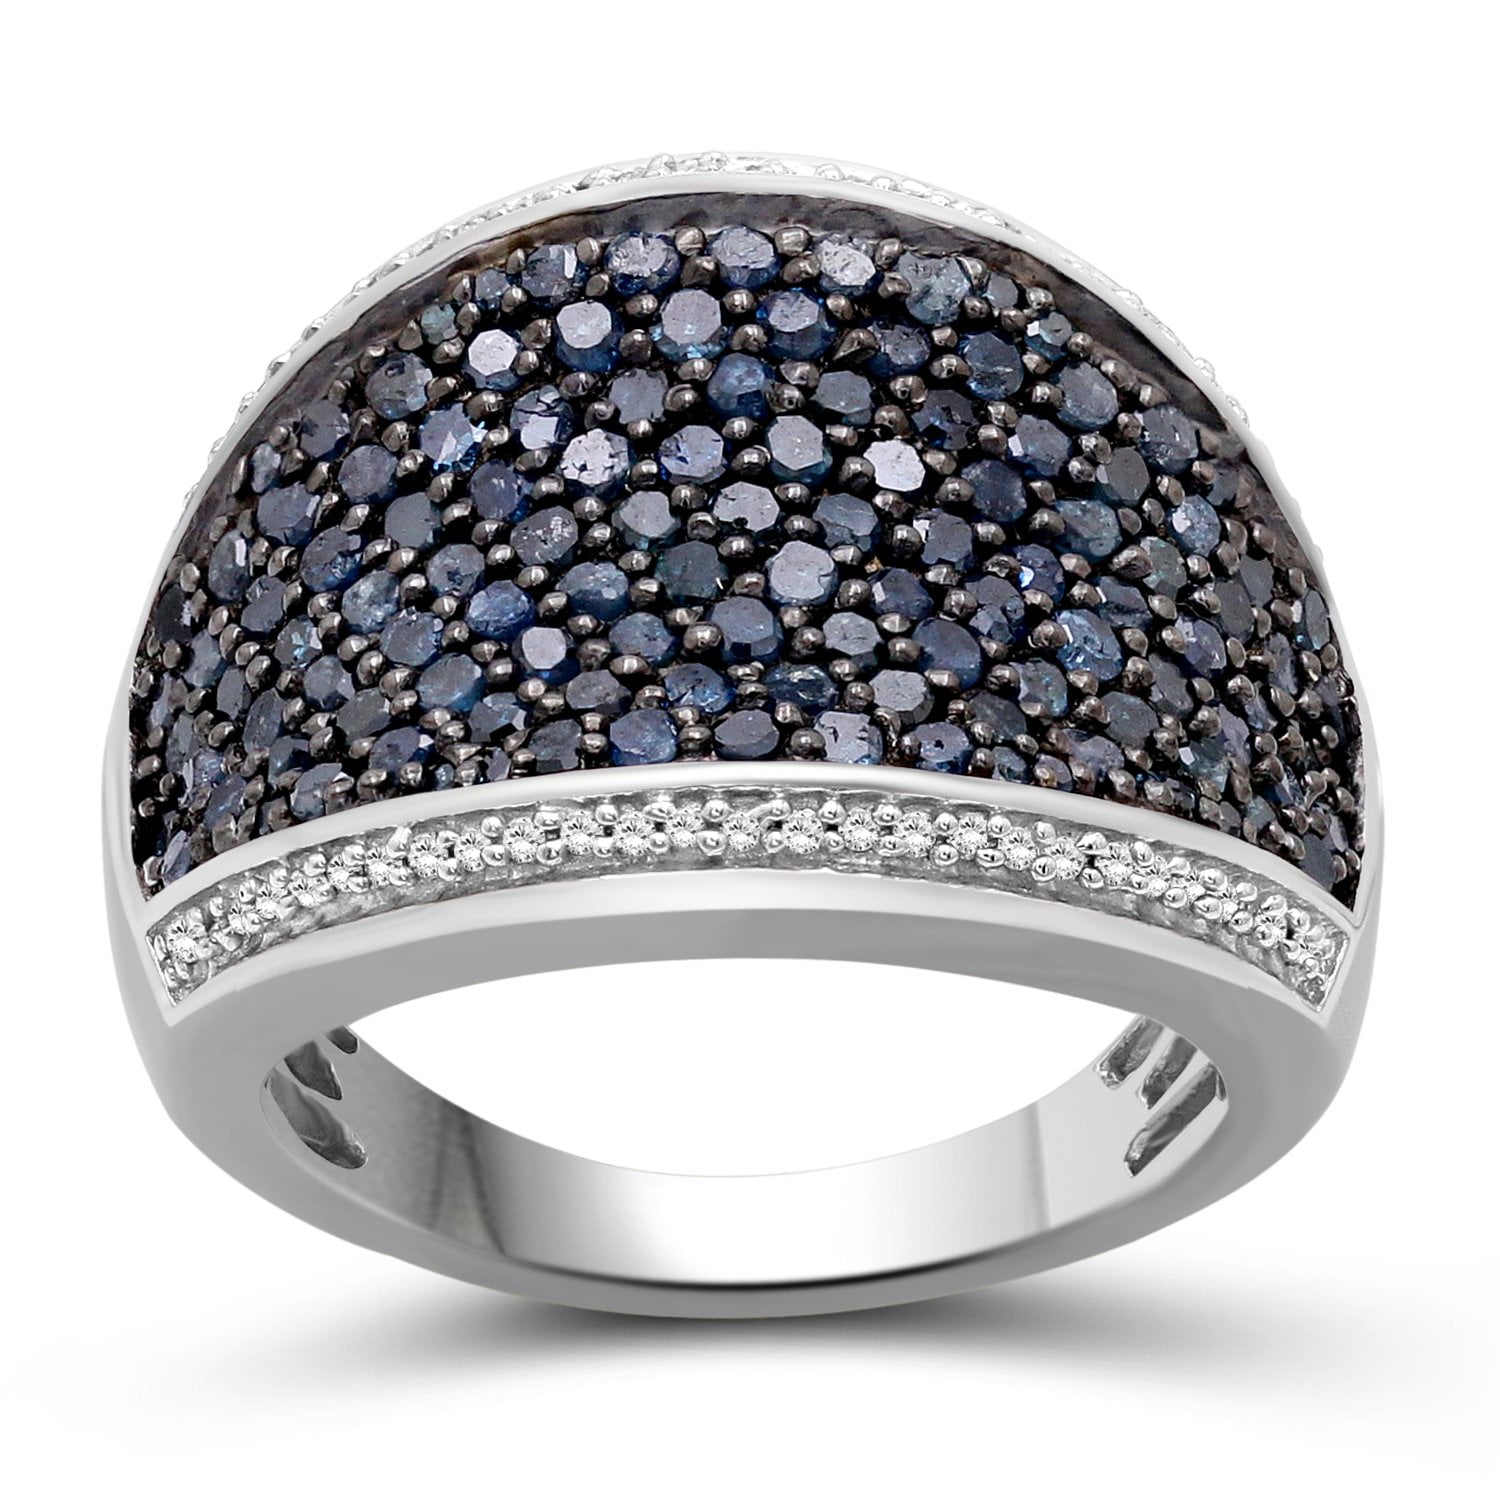 Black Diamonds Sterling Silver Mens Ring Jewelexcess 1.00 Carat T.W 